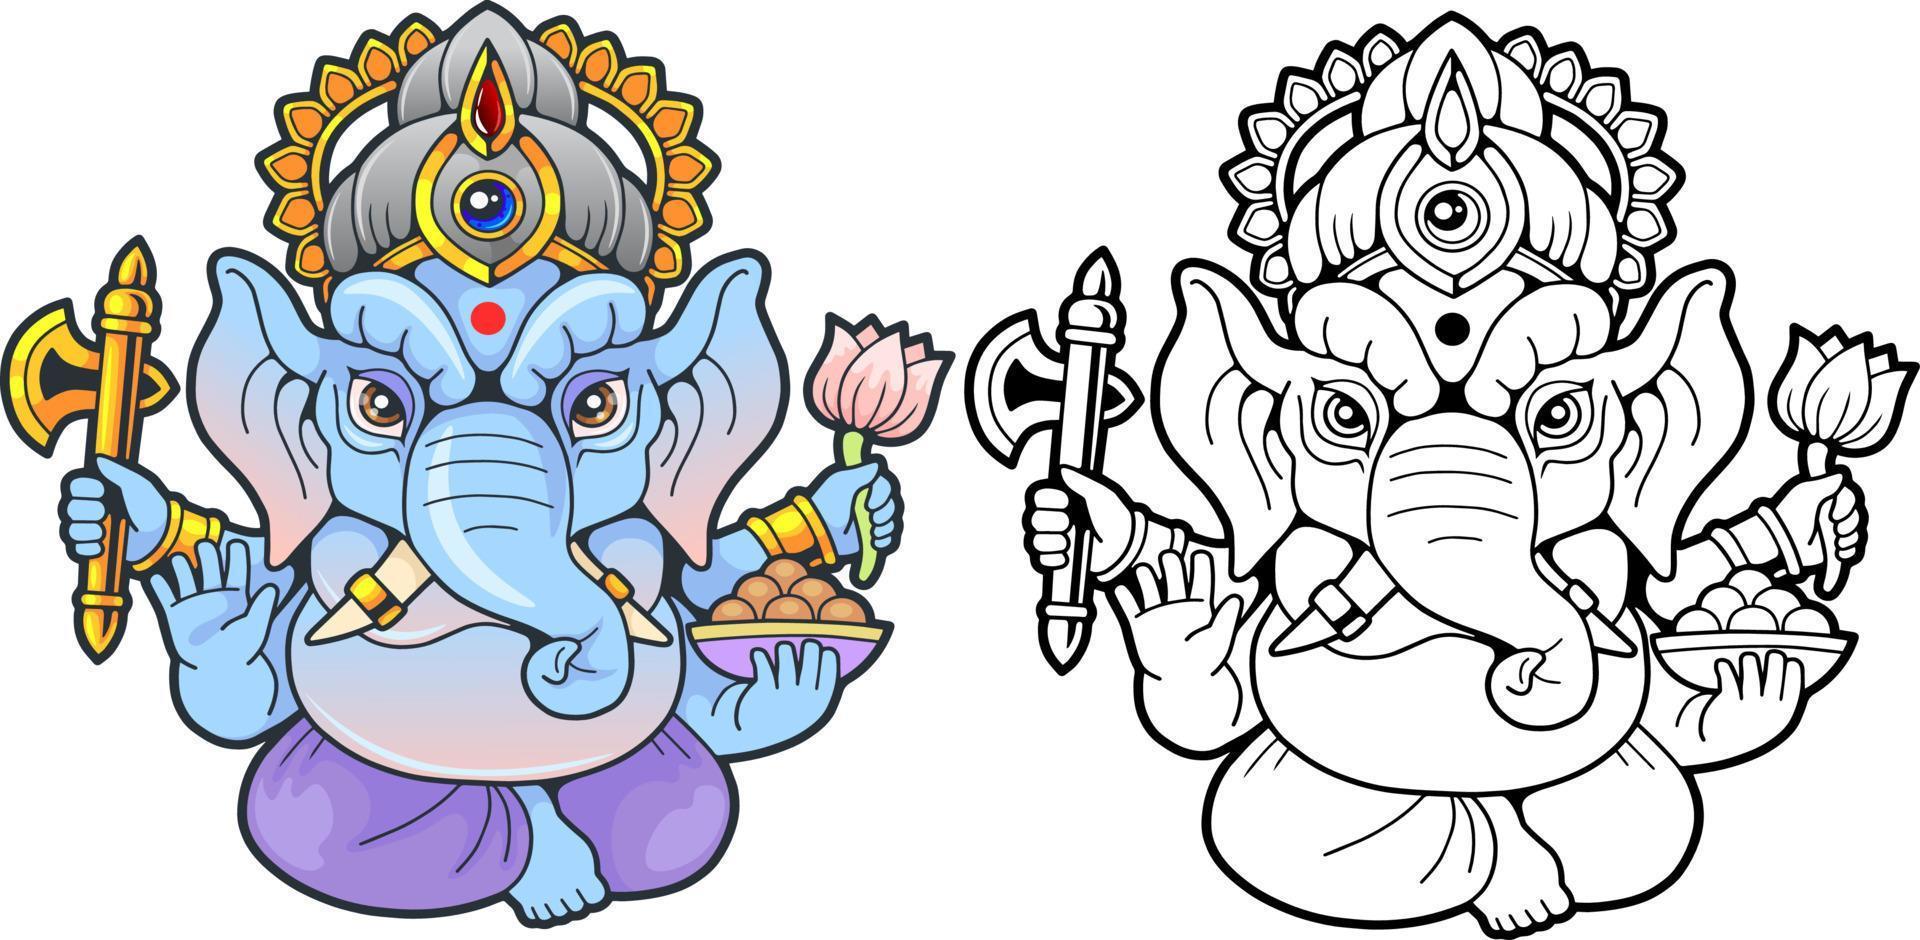 Indisch olifant god ganesha, illustratie ontwerp vector